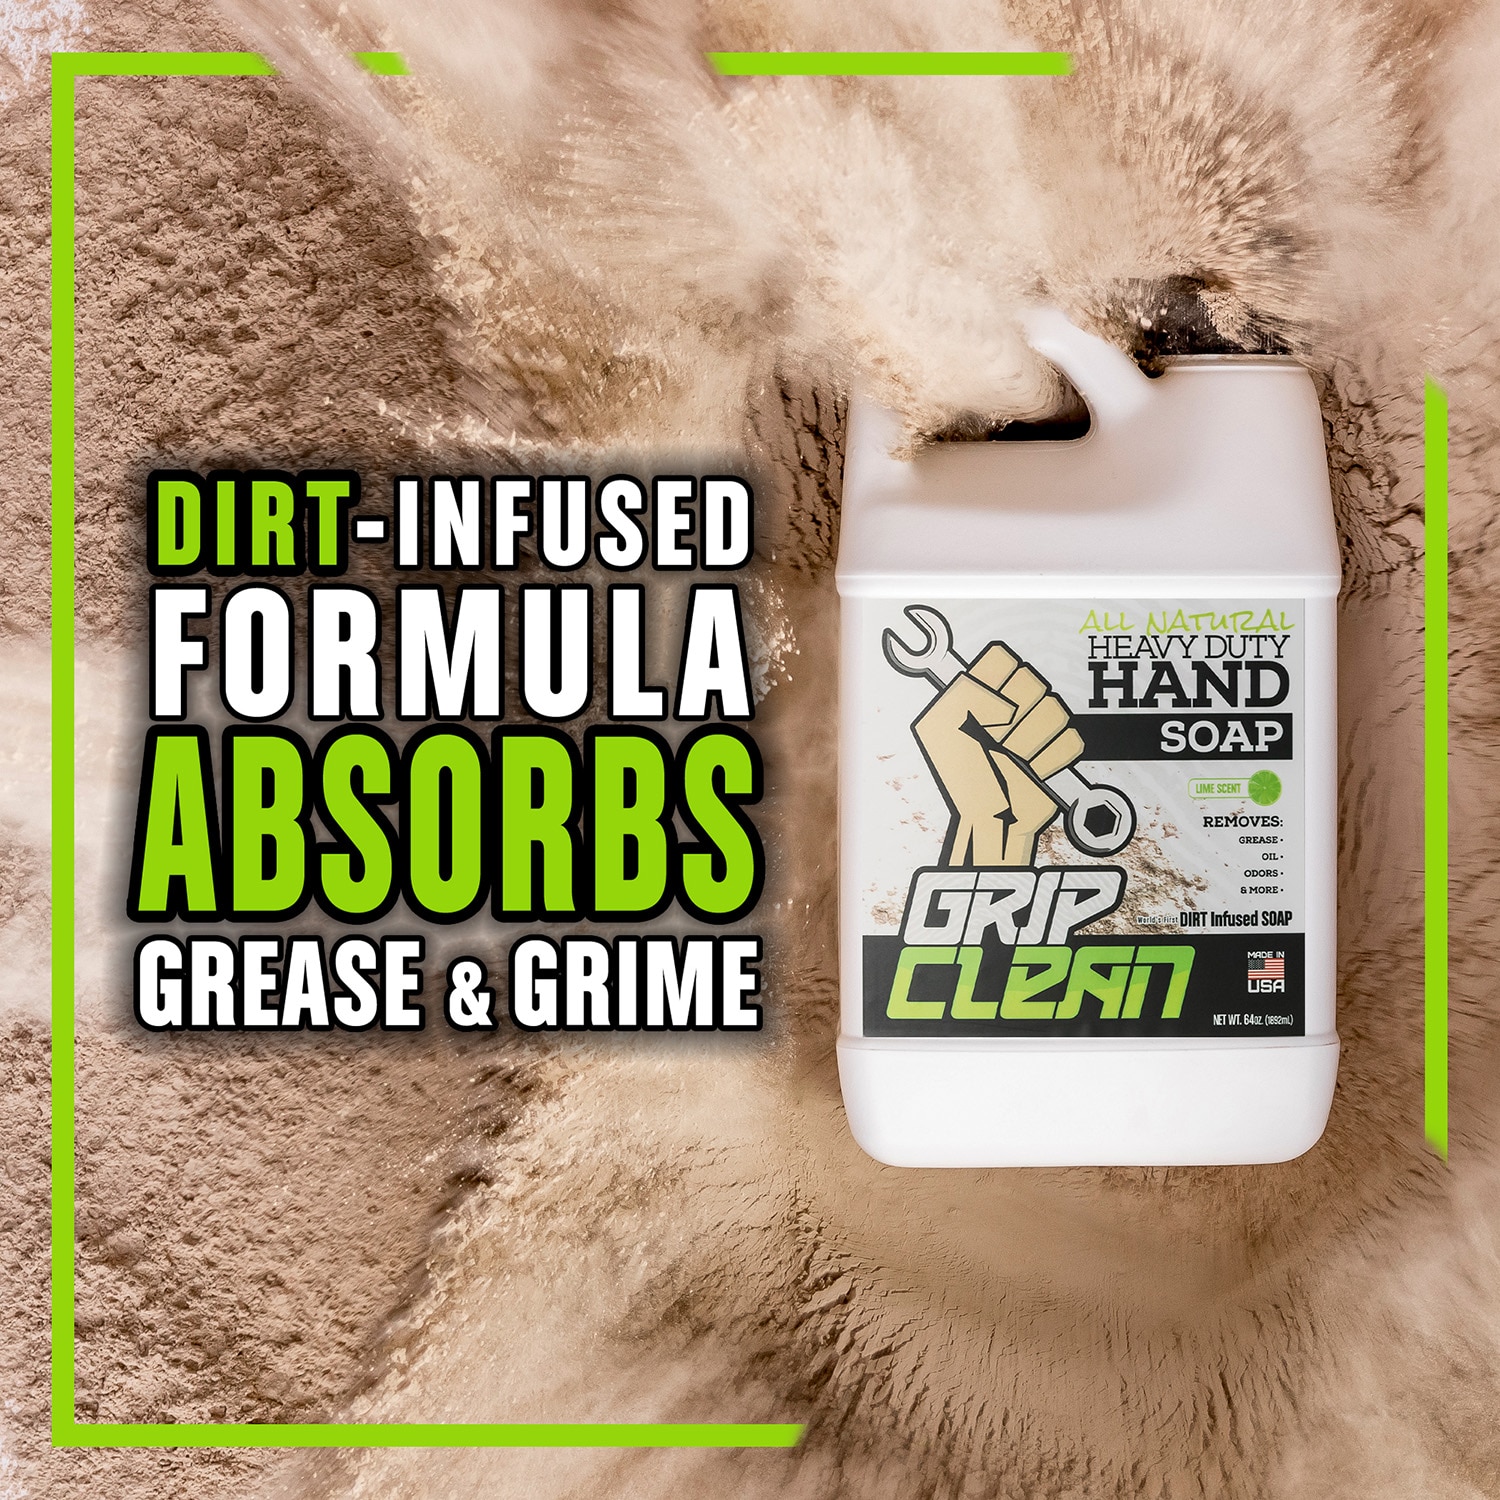 Grip Clean Grip 8-oz Citrus Foaming Hand Soap at